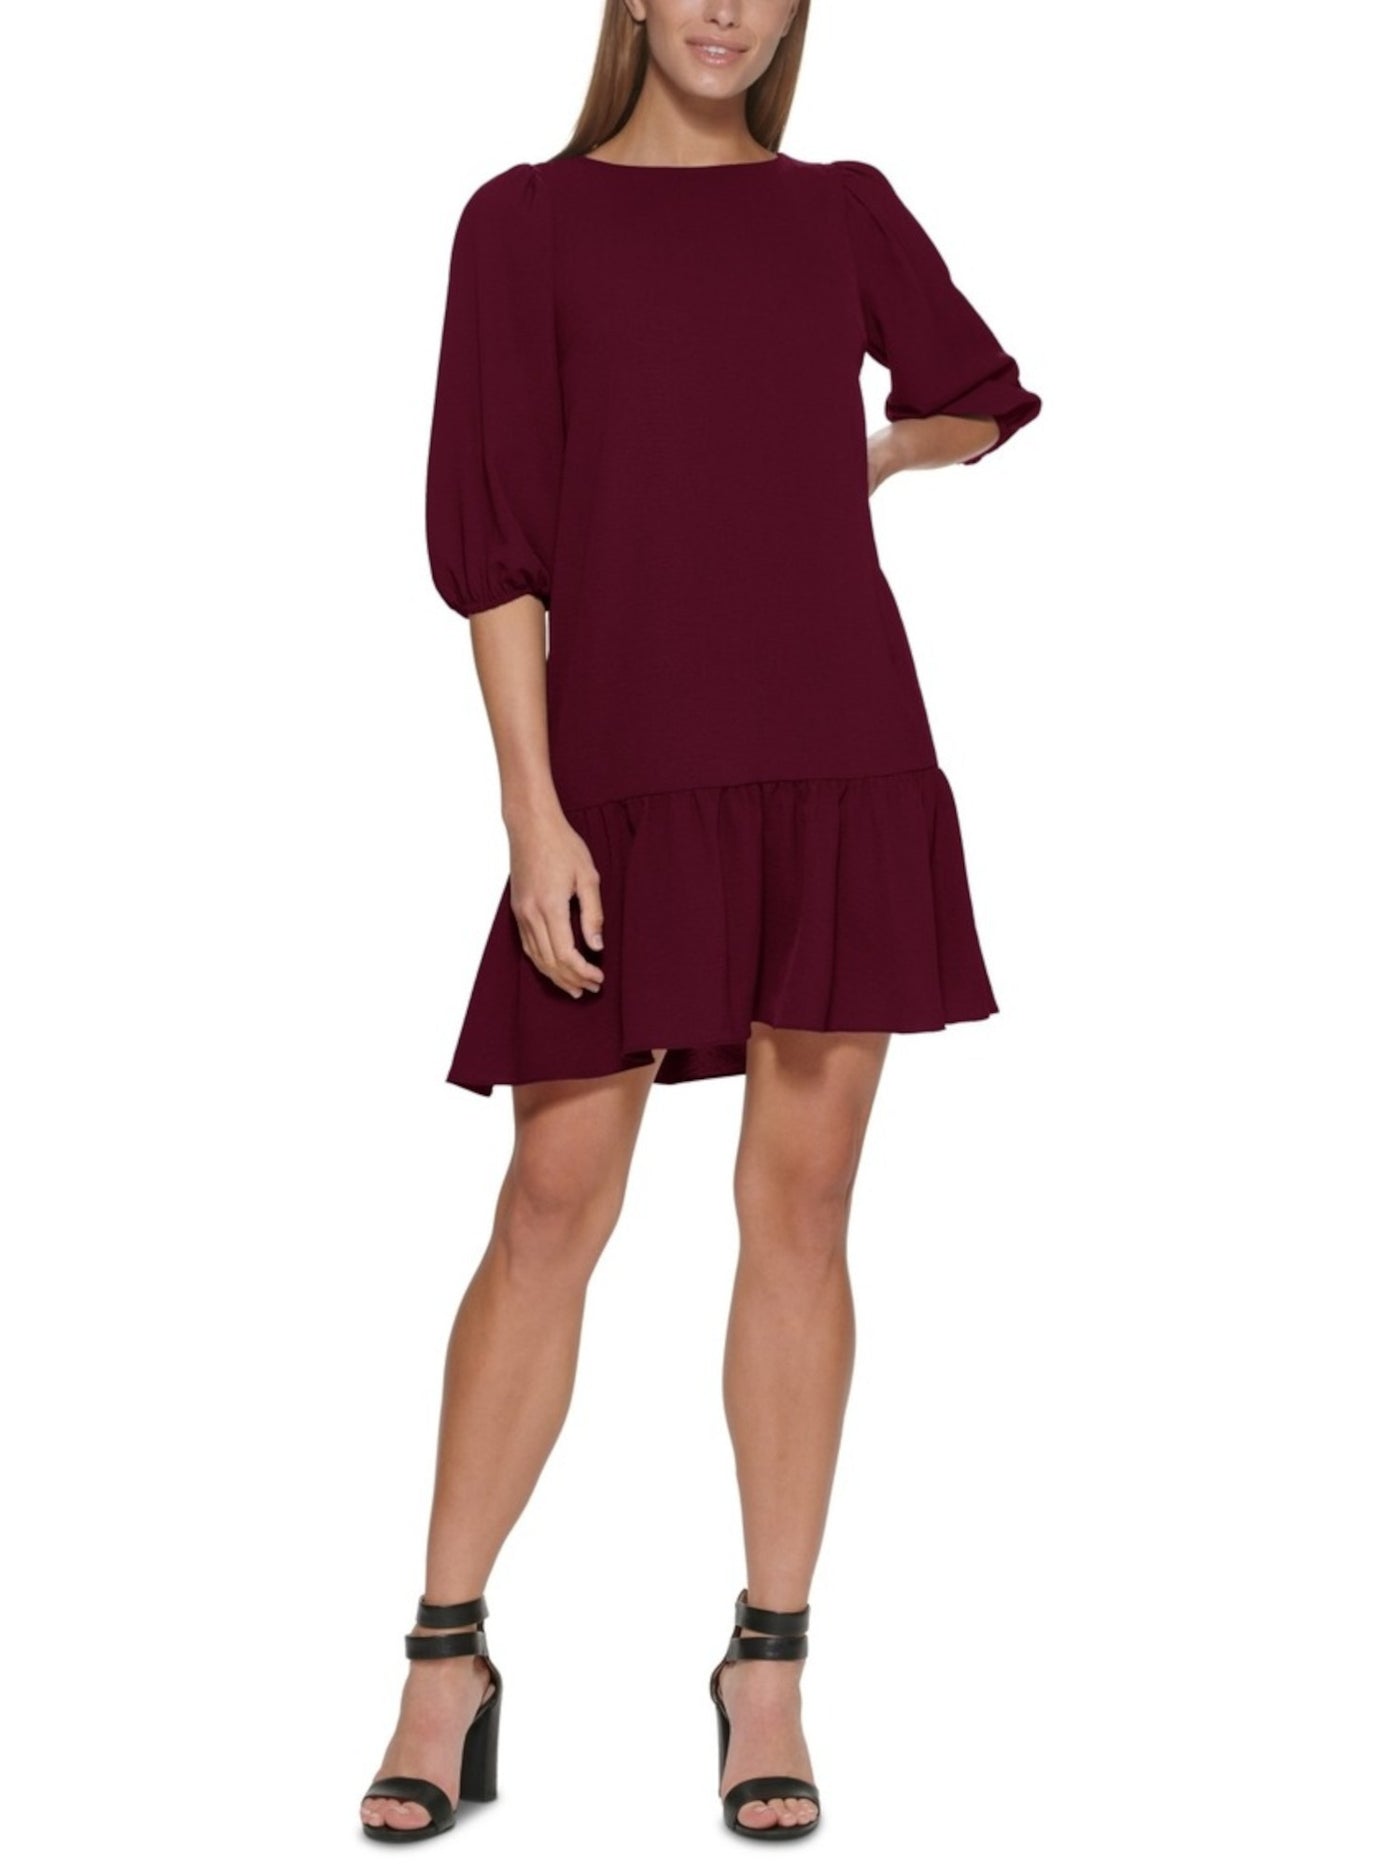 DKNY Womens Burgundy Textured Zippered Ruffled Hem Elbow Sleeve Jewel Neck Above The Knee Party Shift Dress 16